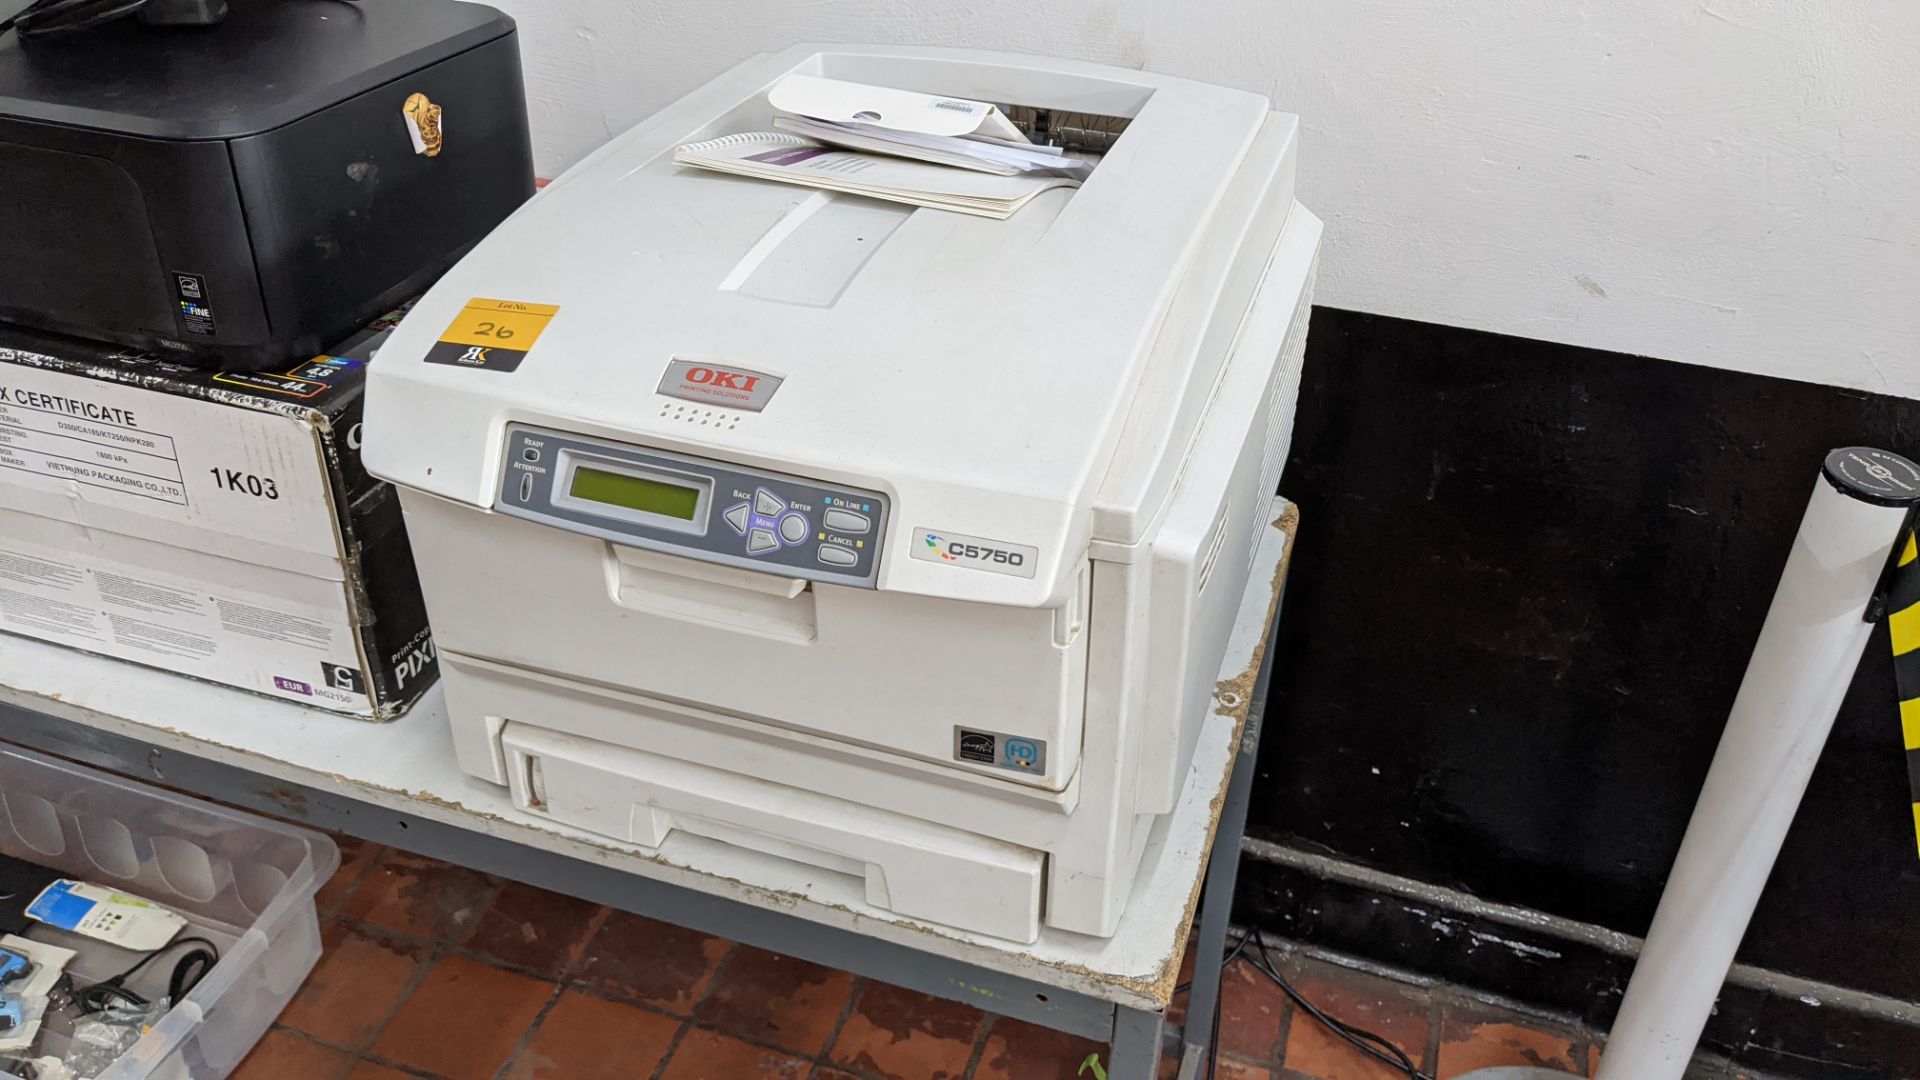 Oki C5750 printer including book pack, driver, user guide & utilities discs, etc. - Image 5 of 5